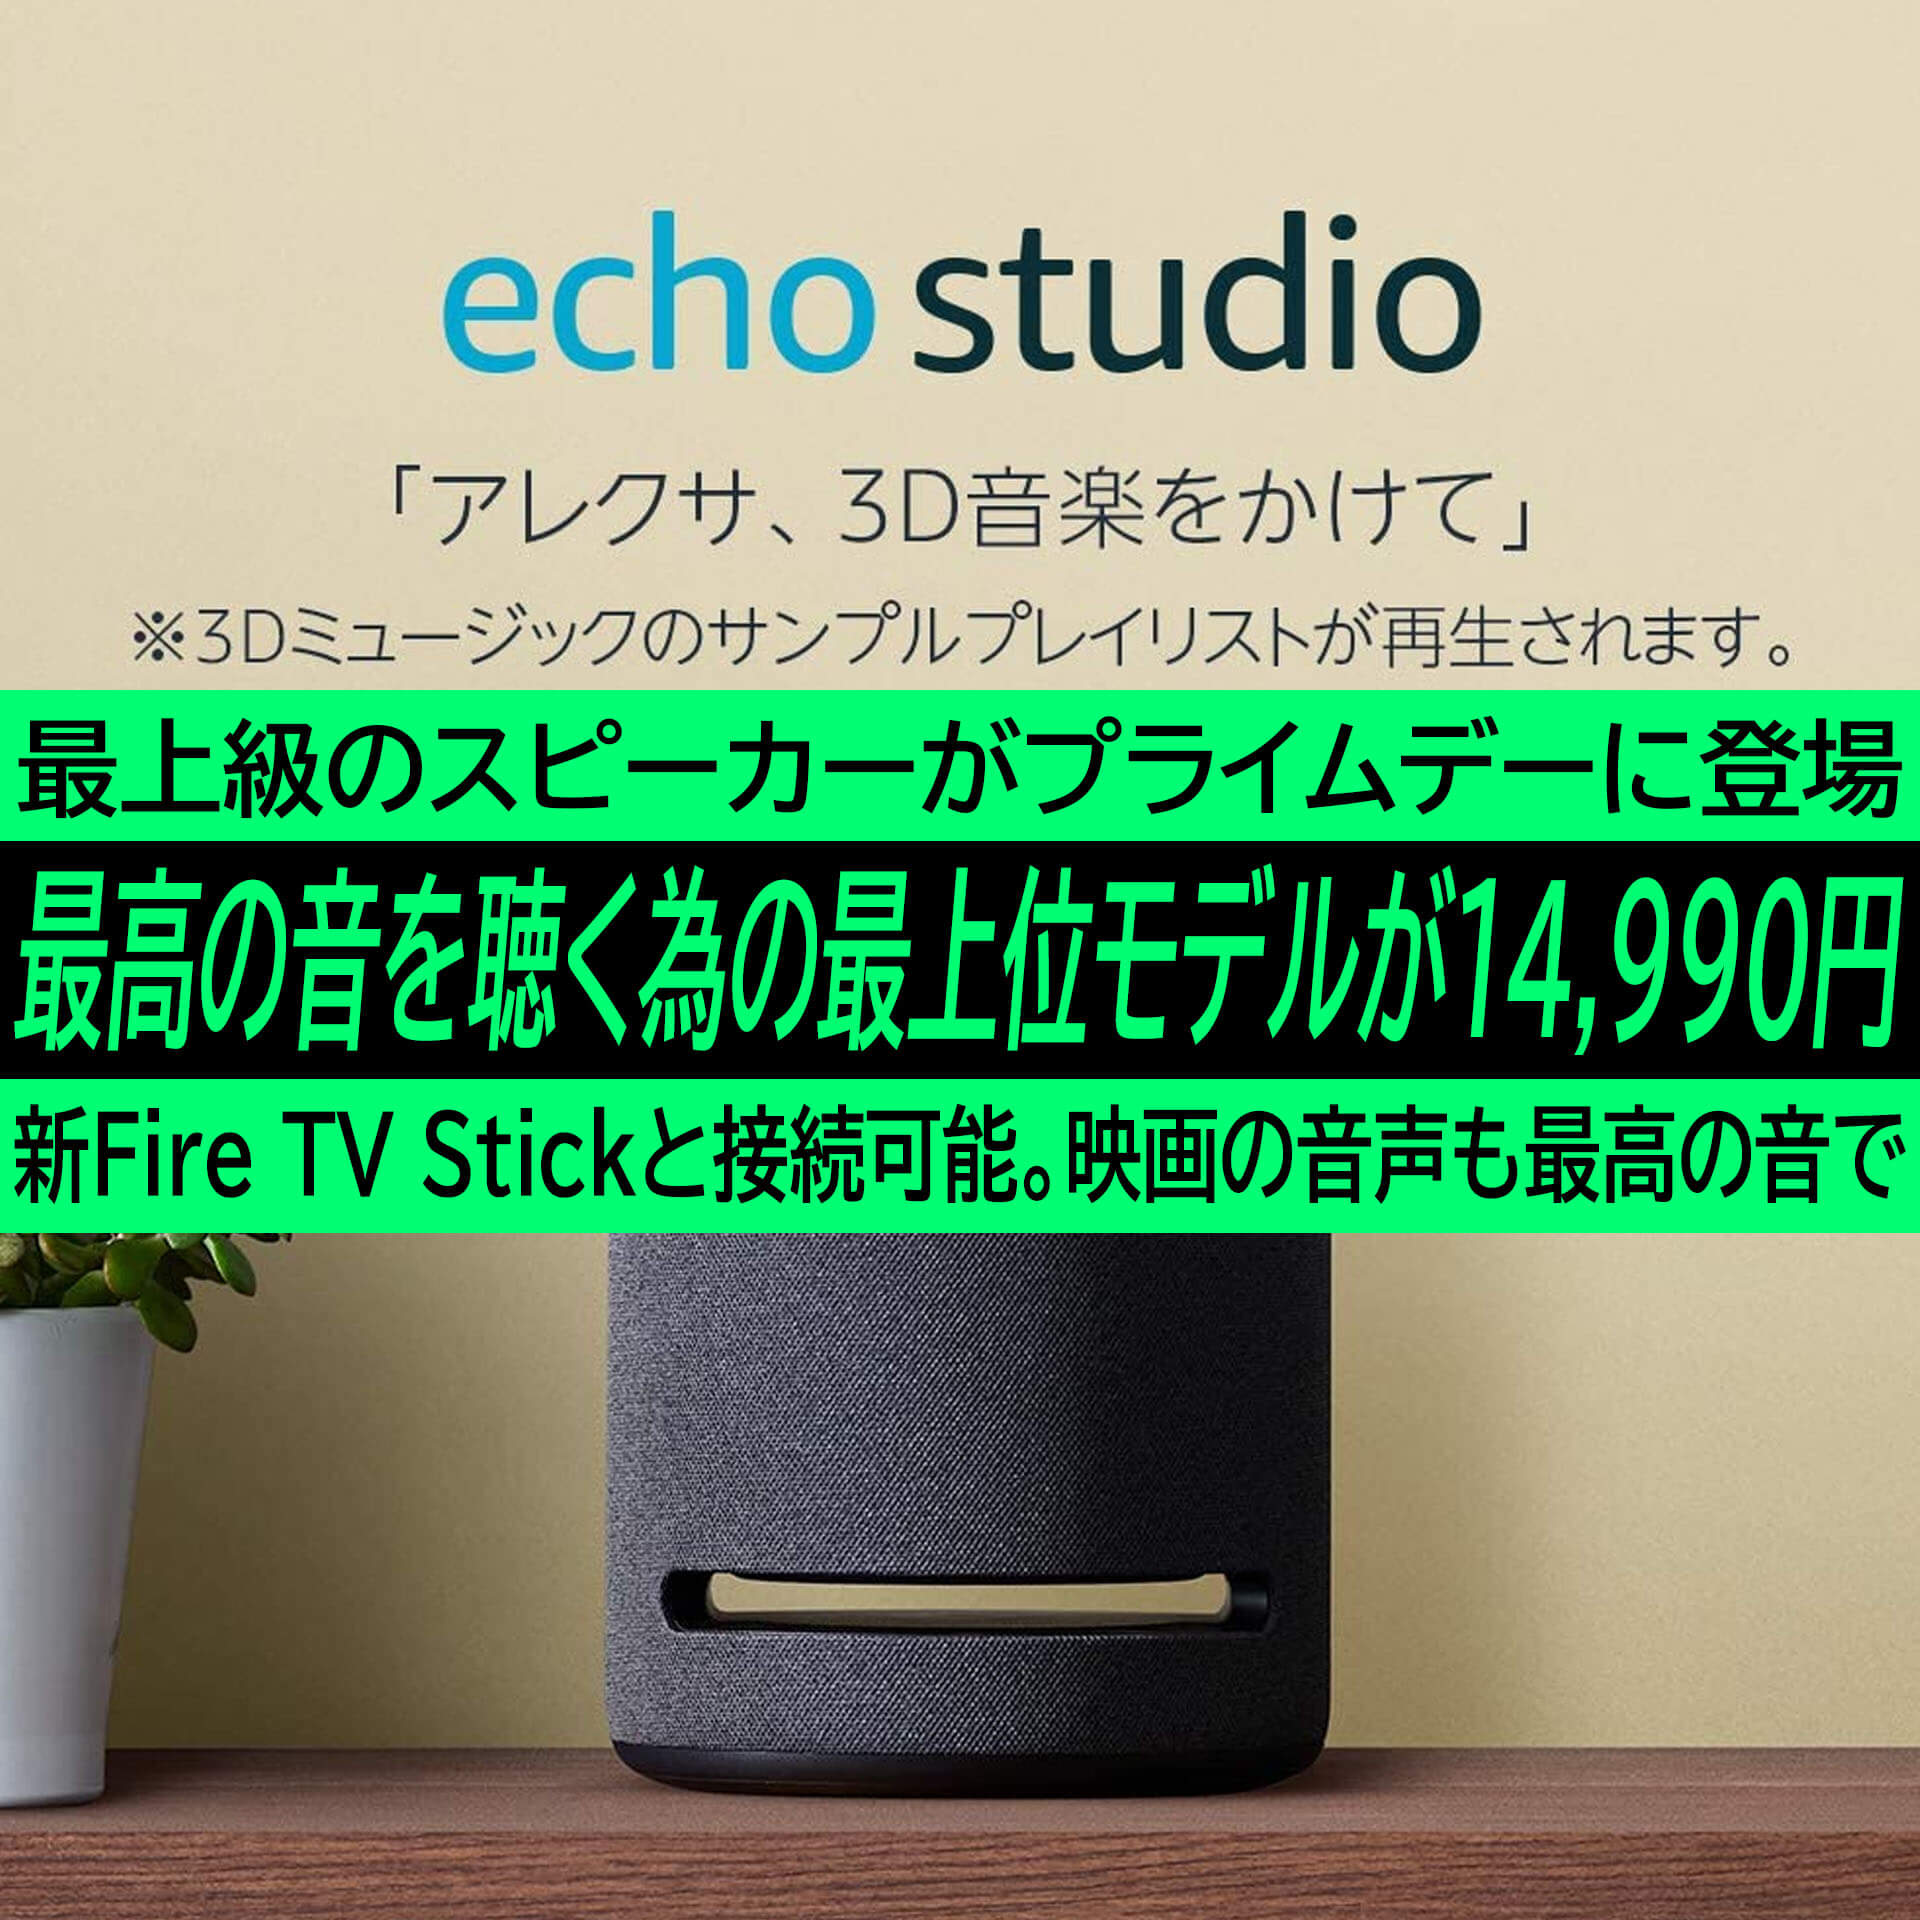 Fire Tv Stick対応 最高の音が聴ける最上位モデルecho Studioがamazonプライムデーで1万5千円